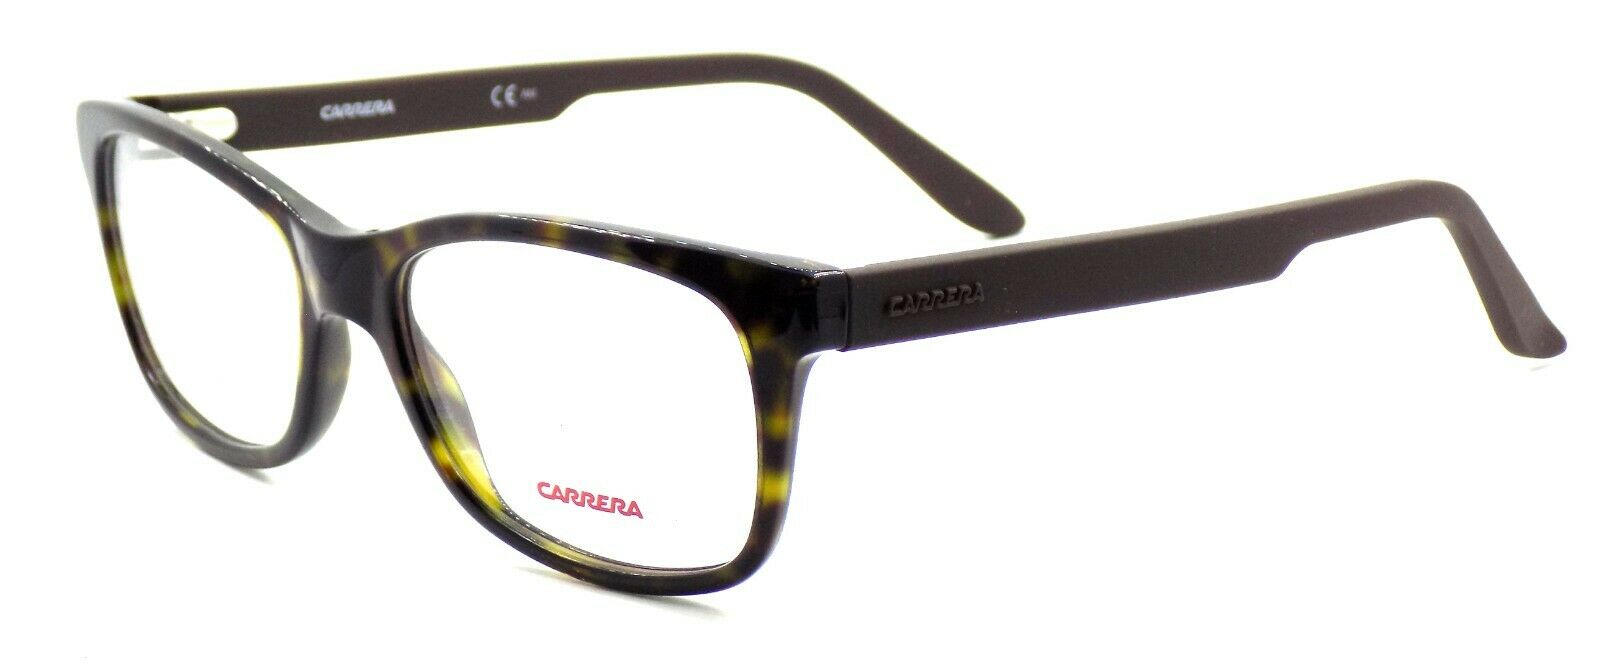 1-Carrera CA6653 GPS Unisex Eyeglasses Frames 52-18-140 Dark Havana Brown + CASE-827886093458-IKSpecs